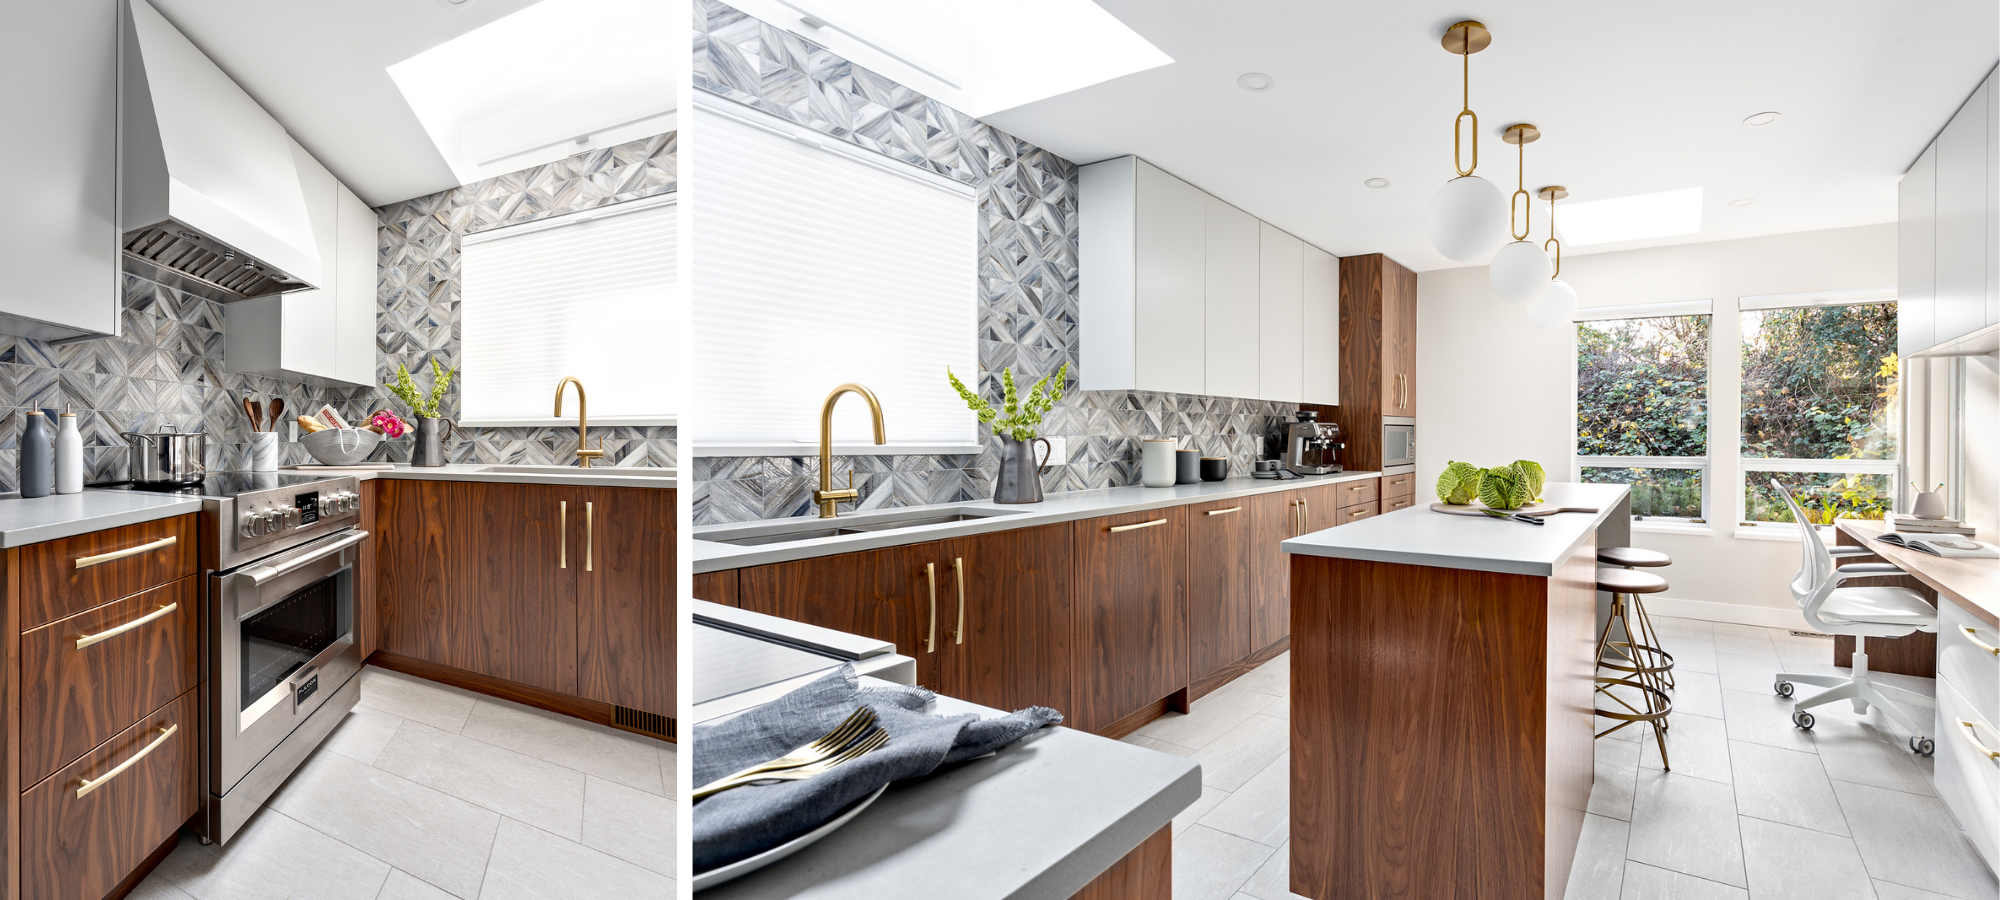 Simply-Home-Decorating-Vancouver-Renovation-Modern-Kitchen-Design-Skylights-Walnut-Cabinets-Geometrical-Backsplash